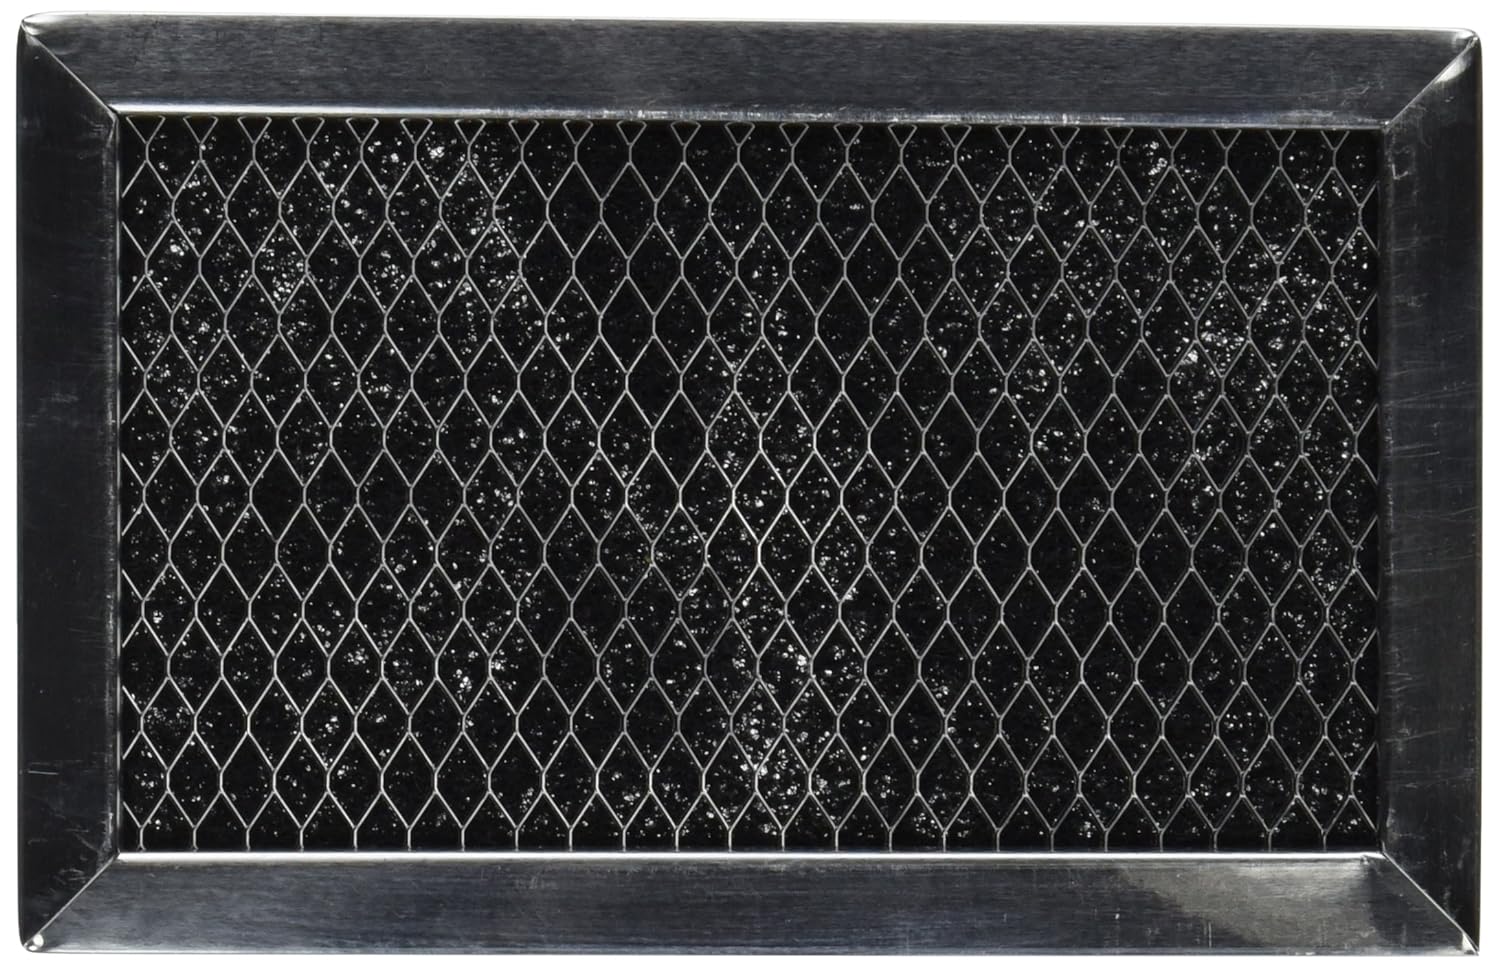 Aftermarket WB02X11124 JX81J GE Microwave filter